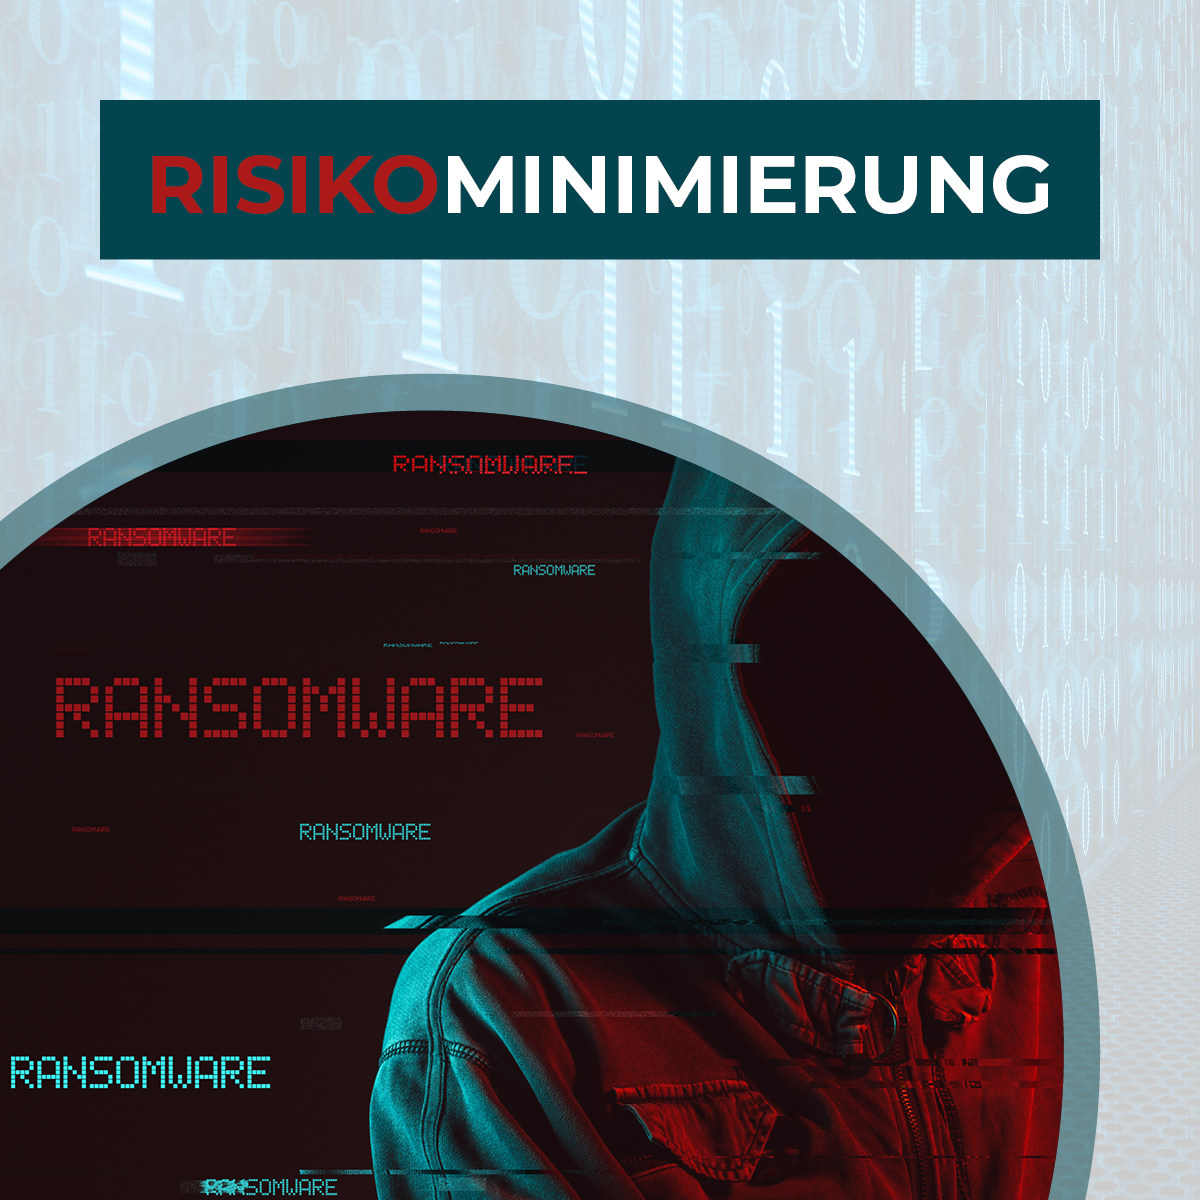 Ransomware Attack Malware Hacker Around The World Background